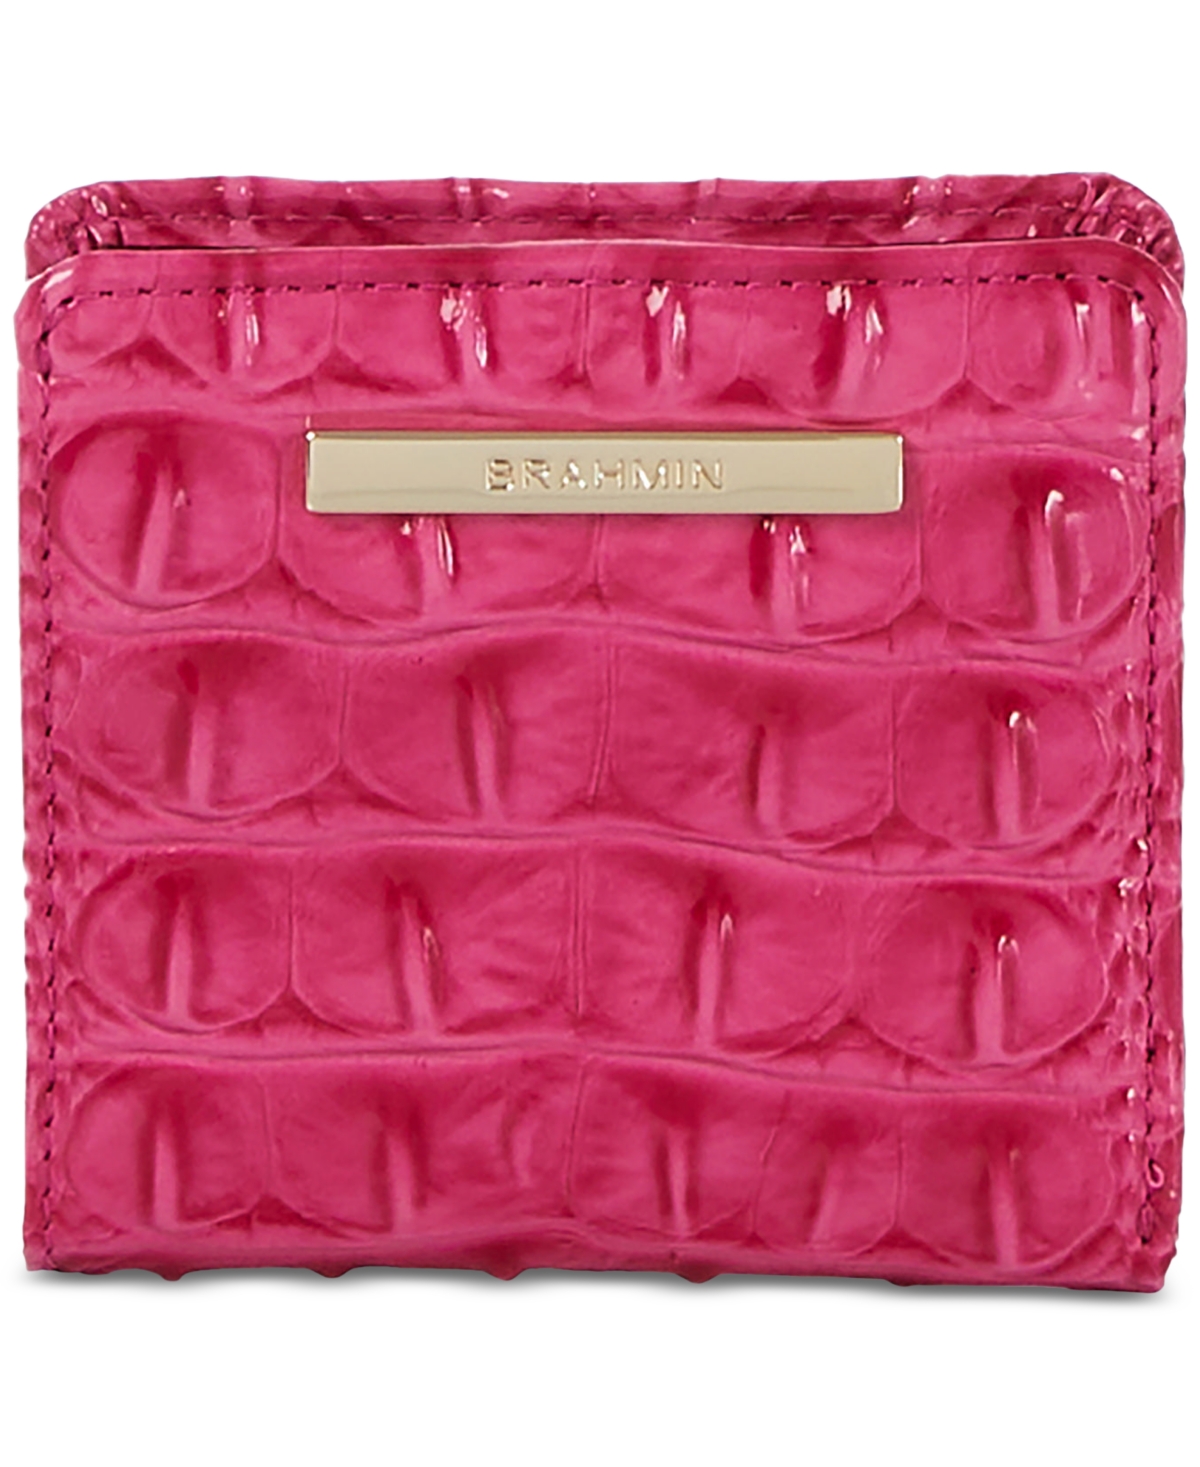 Brahmin Jane Melbourne Embossed Leather Wallet In Pink